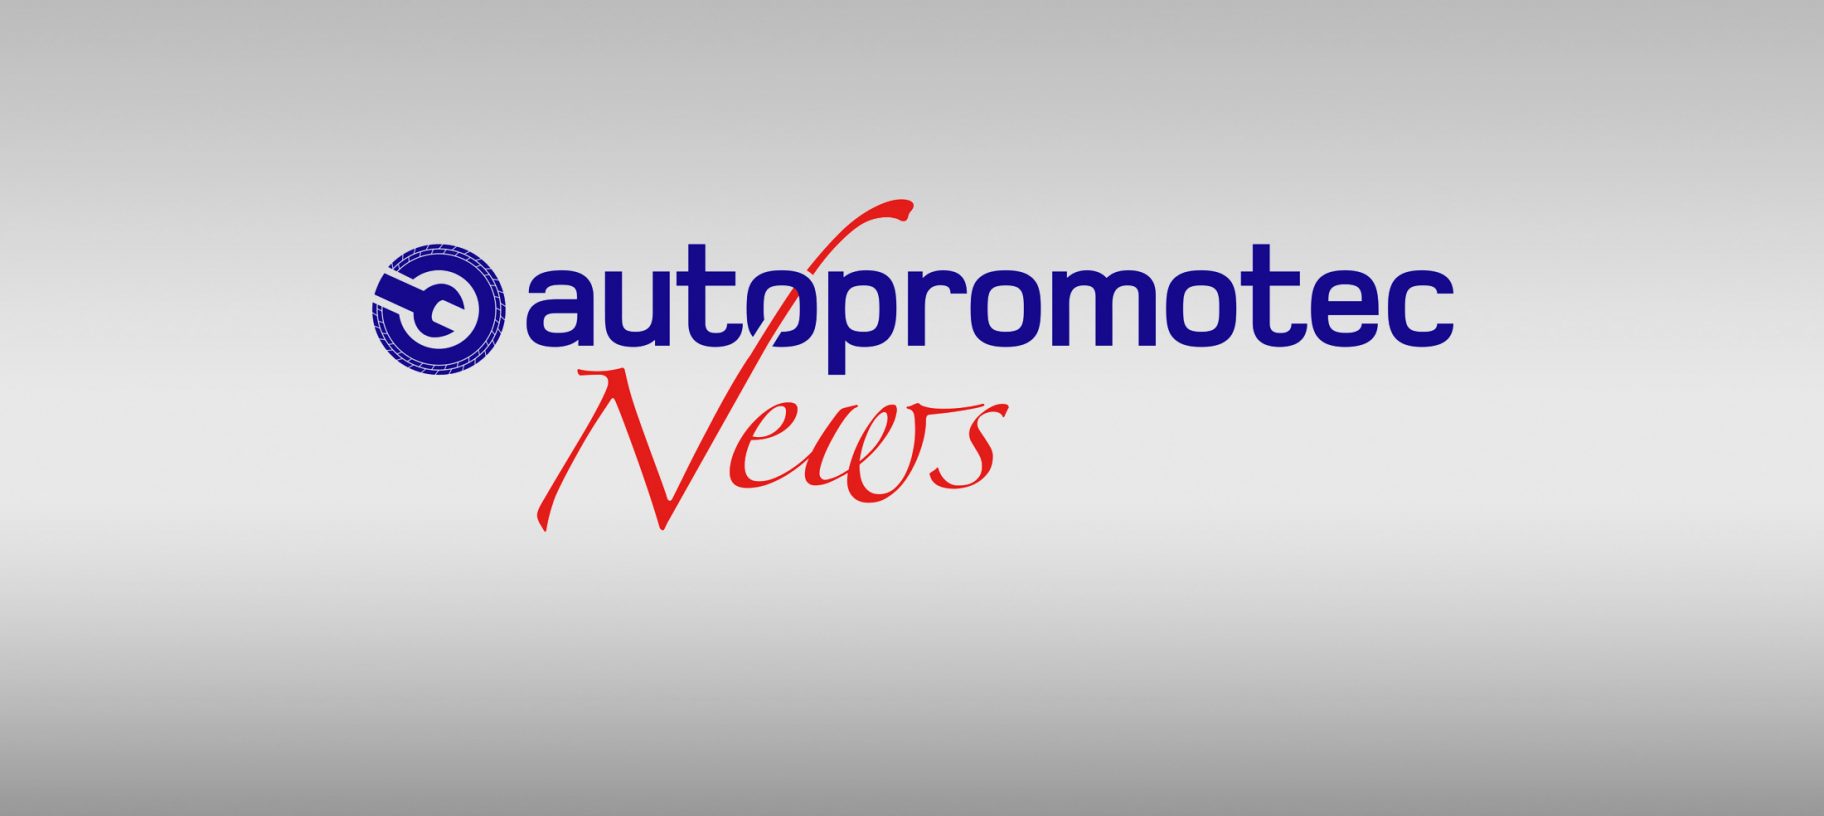 Autopromotec-news-logo-fiera